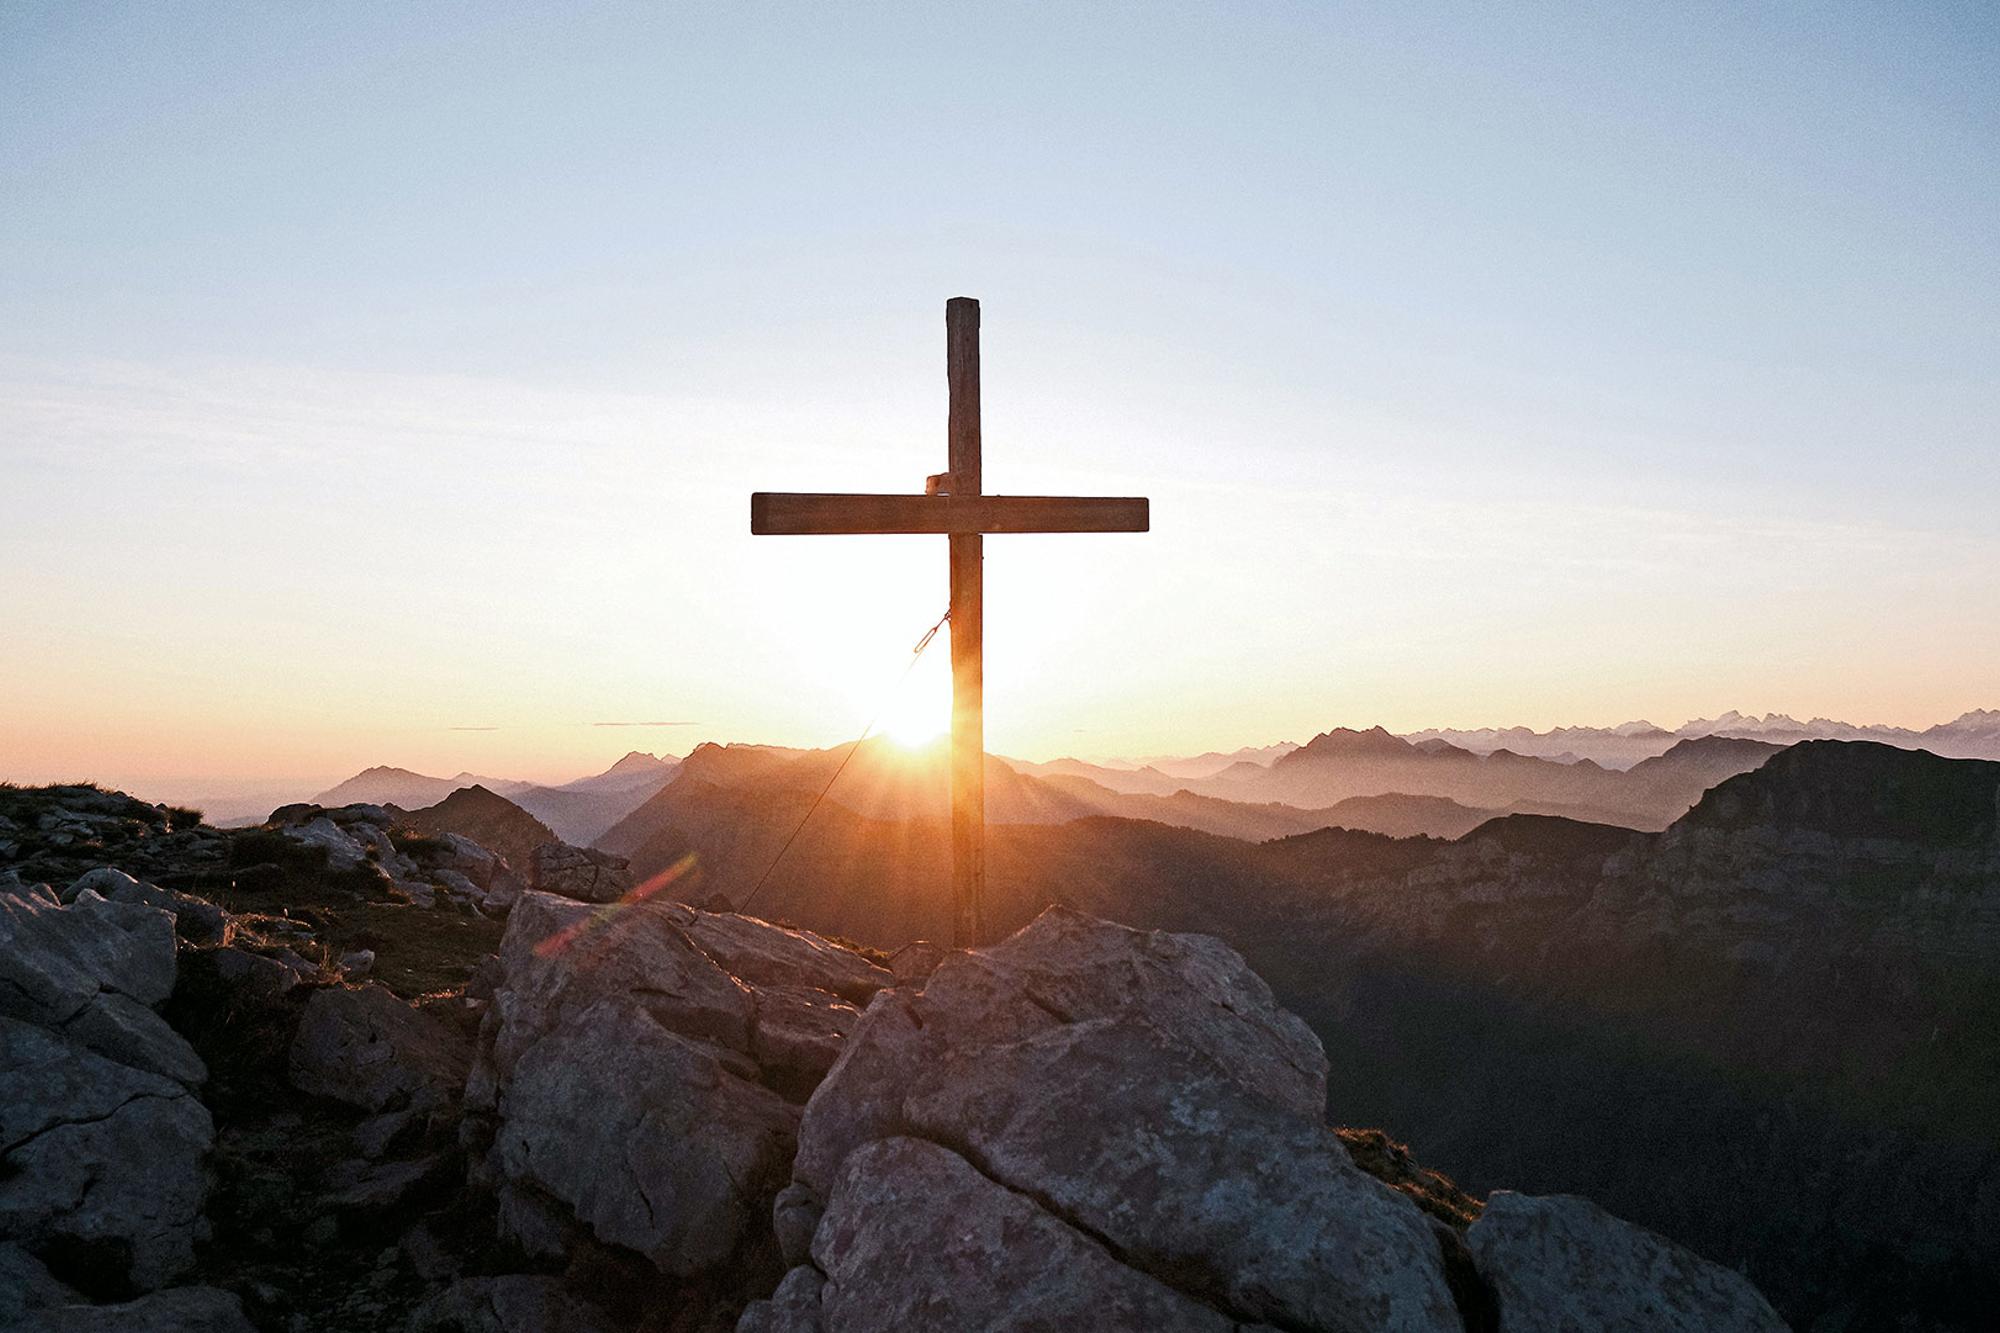 Ett stort kors som står på ett berg - i bakgrunden syns soluppgången och bergstoppar